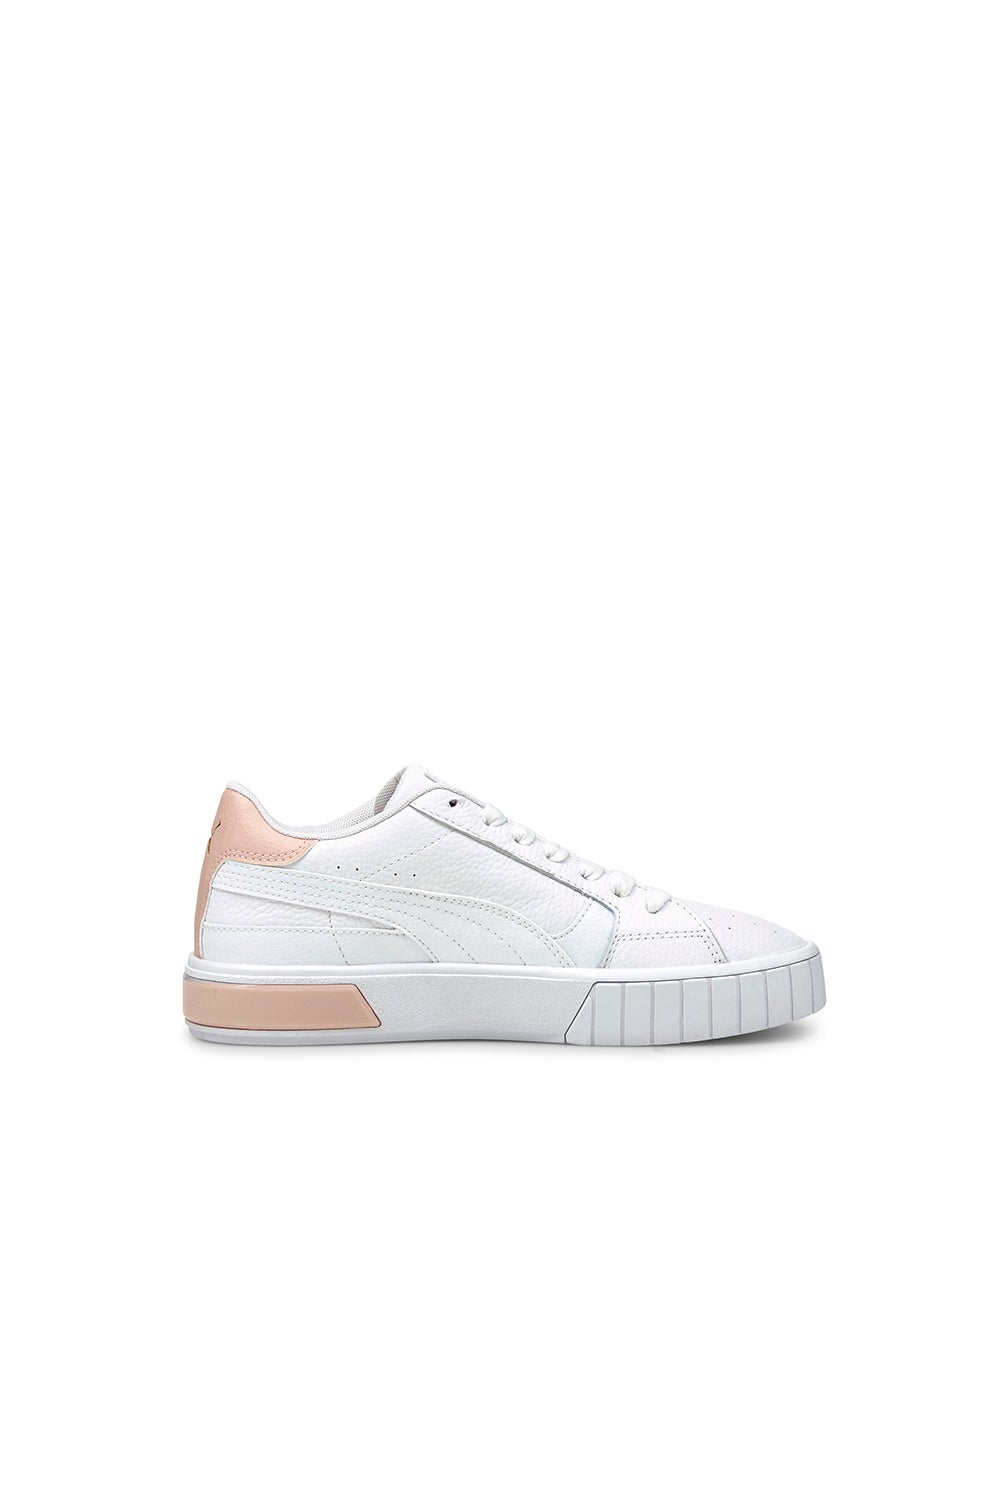 Puma Cali Star Women's Sneakers White/Cloud Pink | Karen Walker